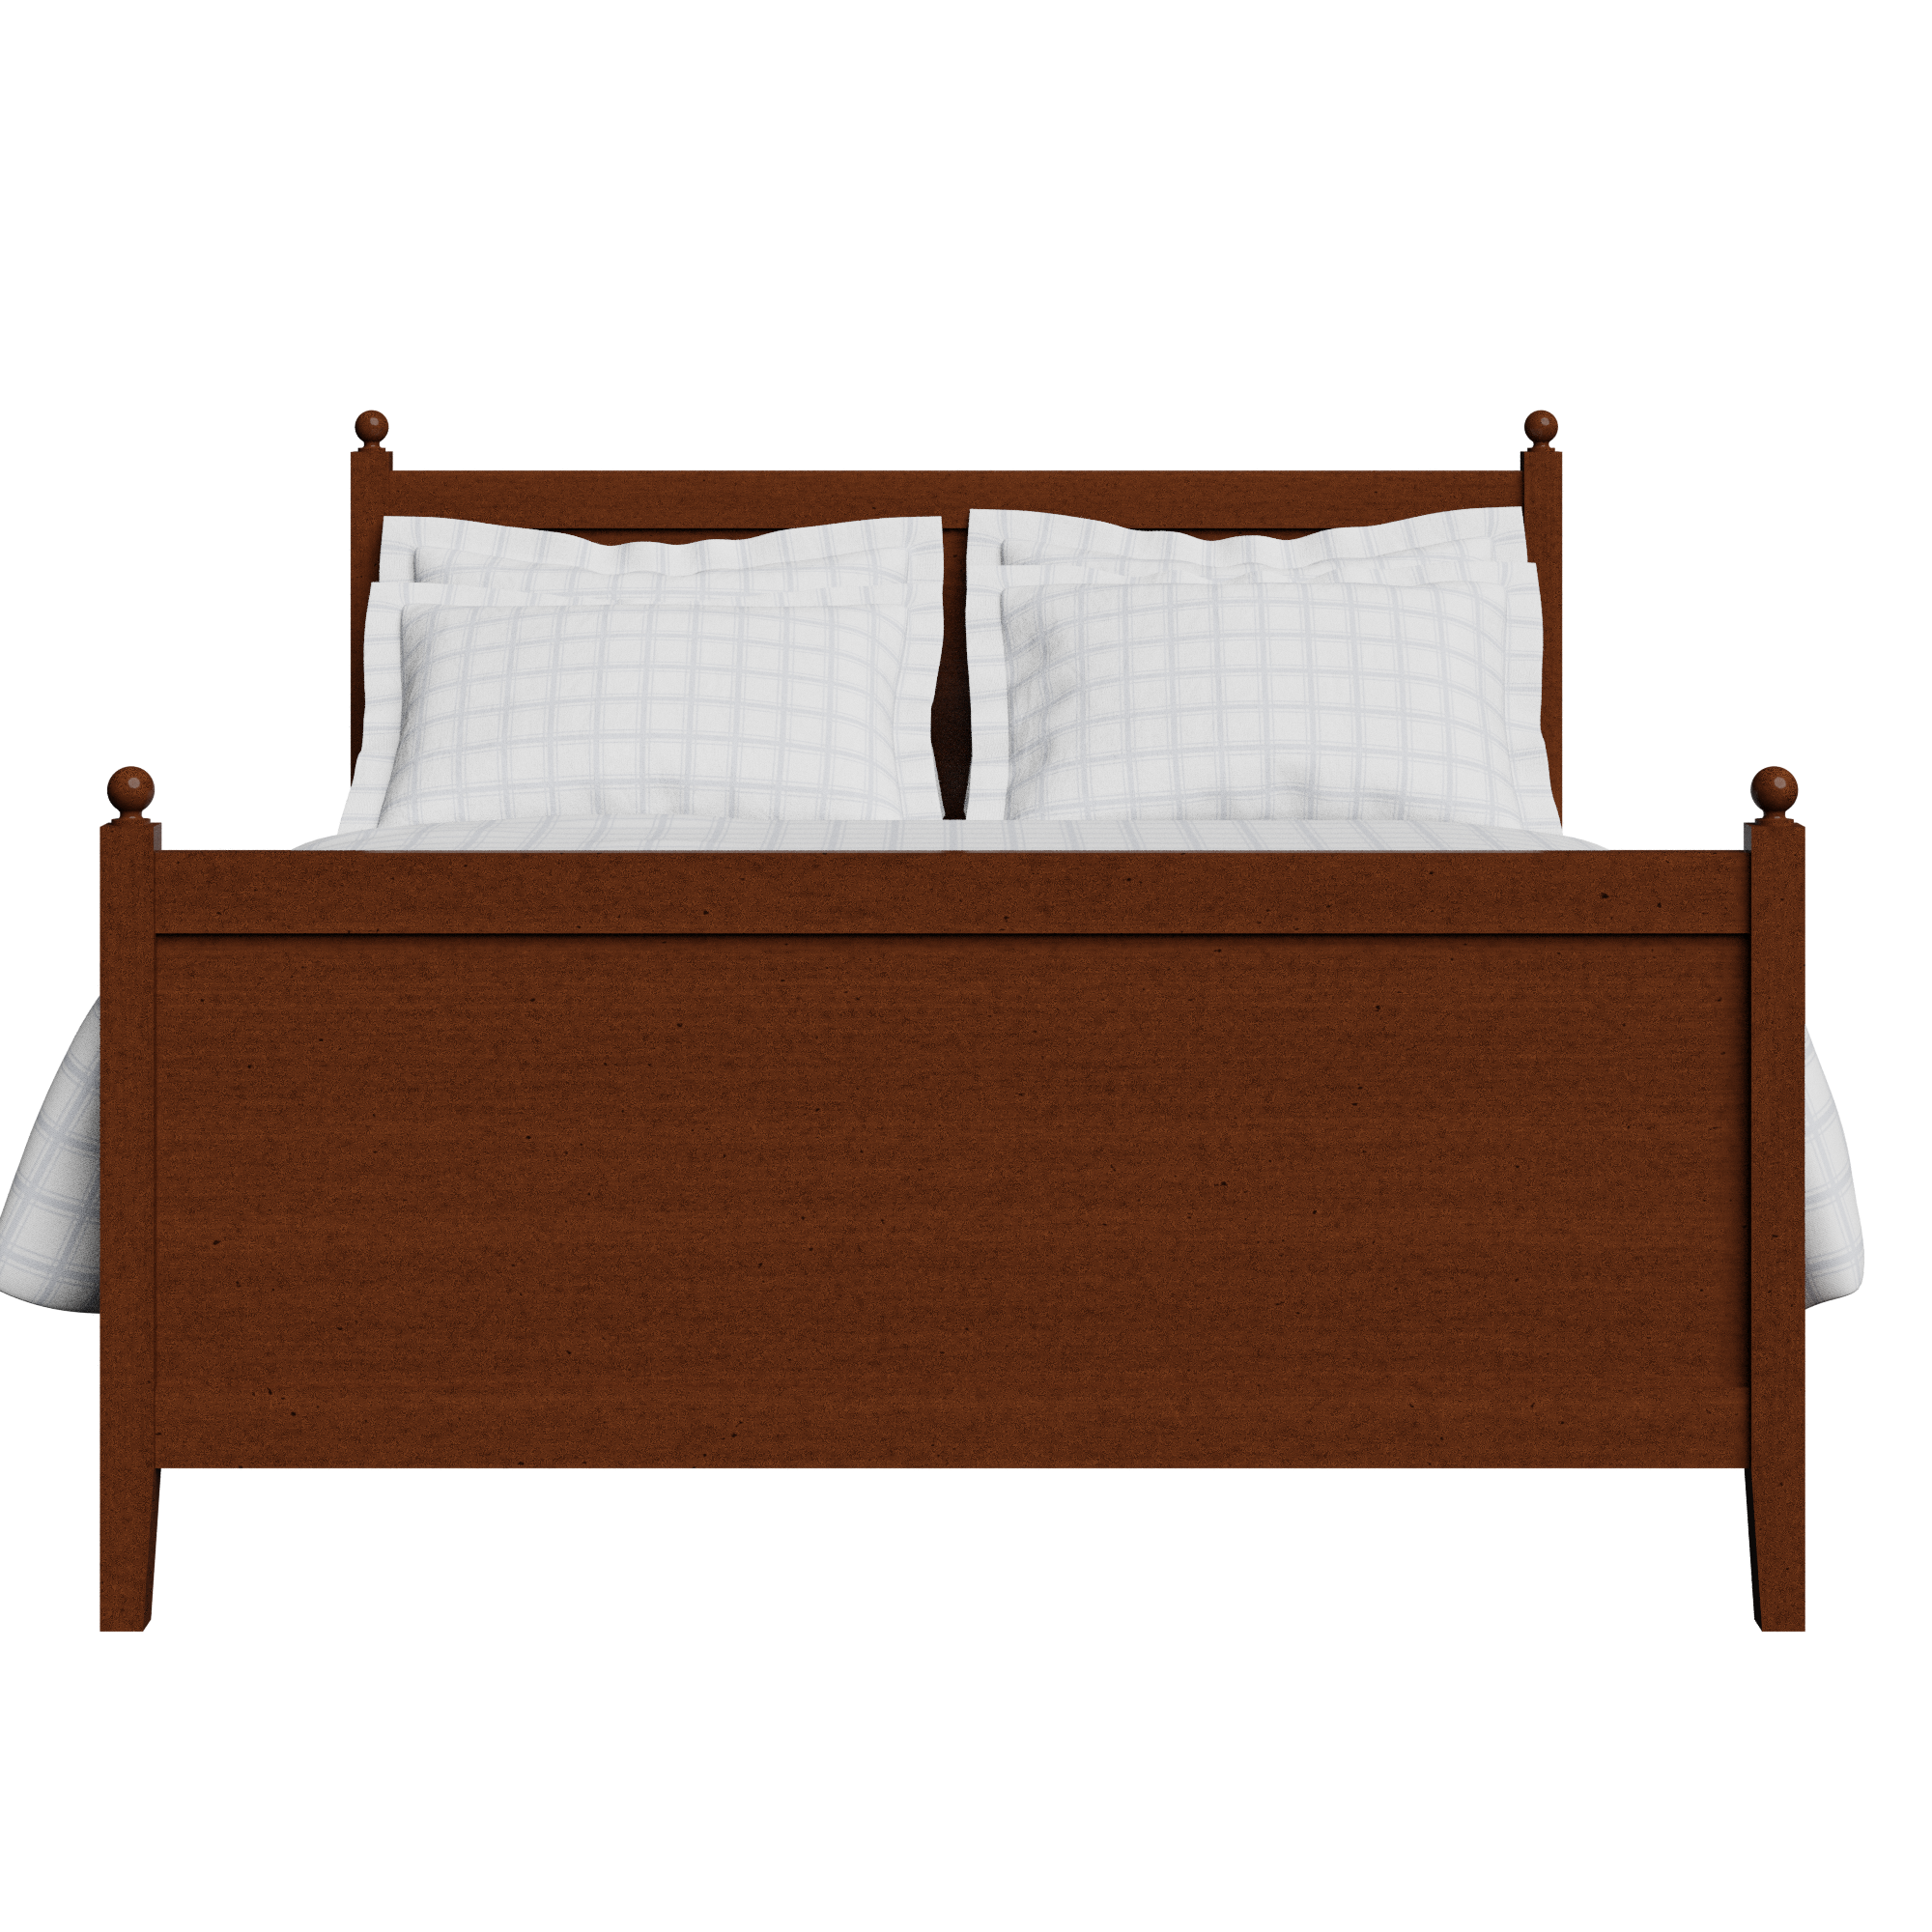 Marbella houten bed in dark cherry